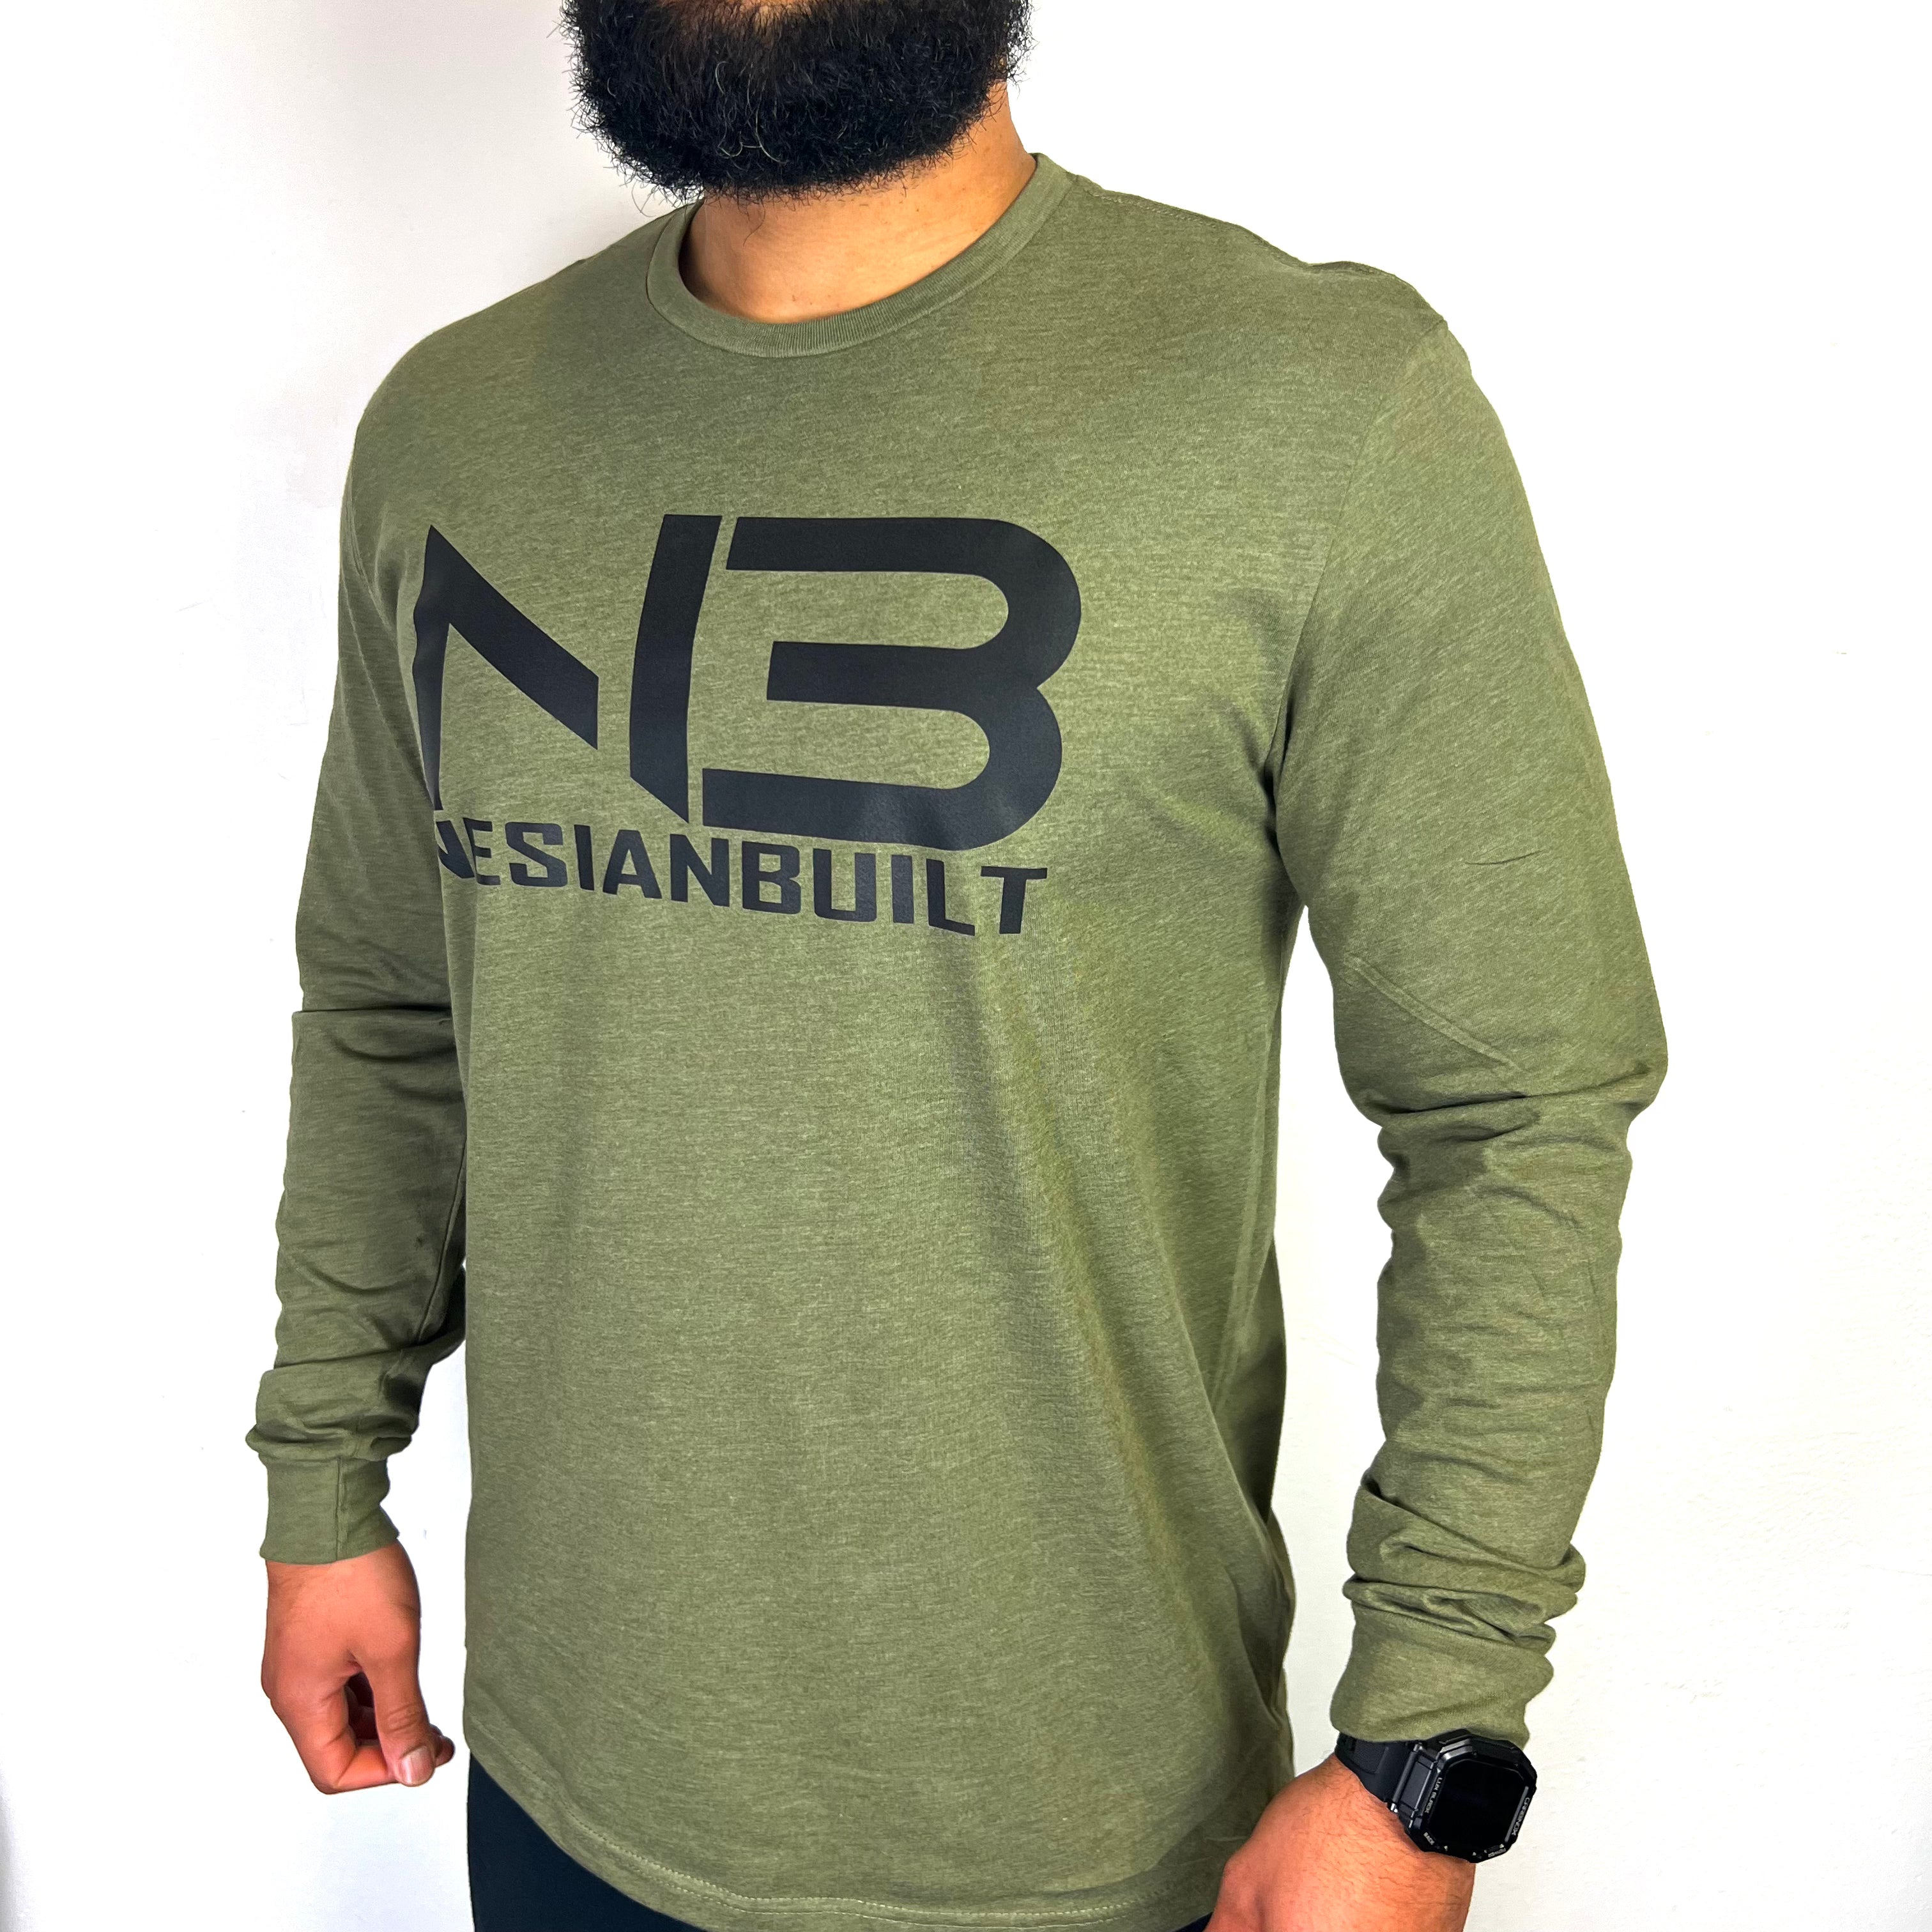 NB Long-Sleeve Tee (Military Green/Black)